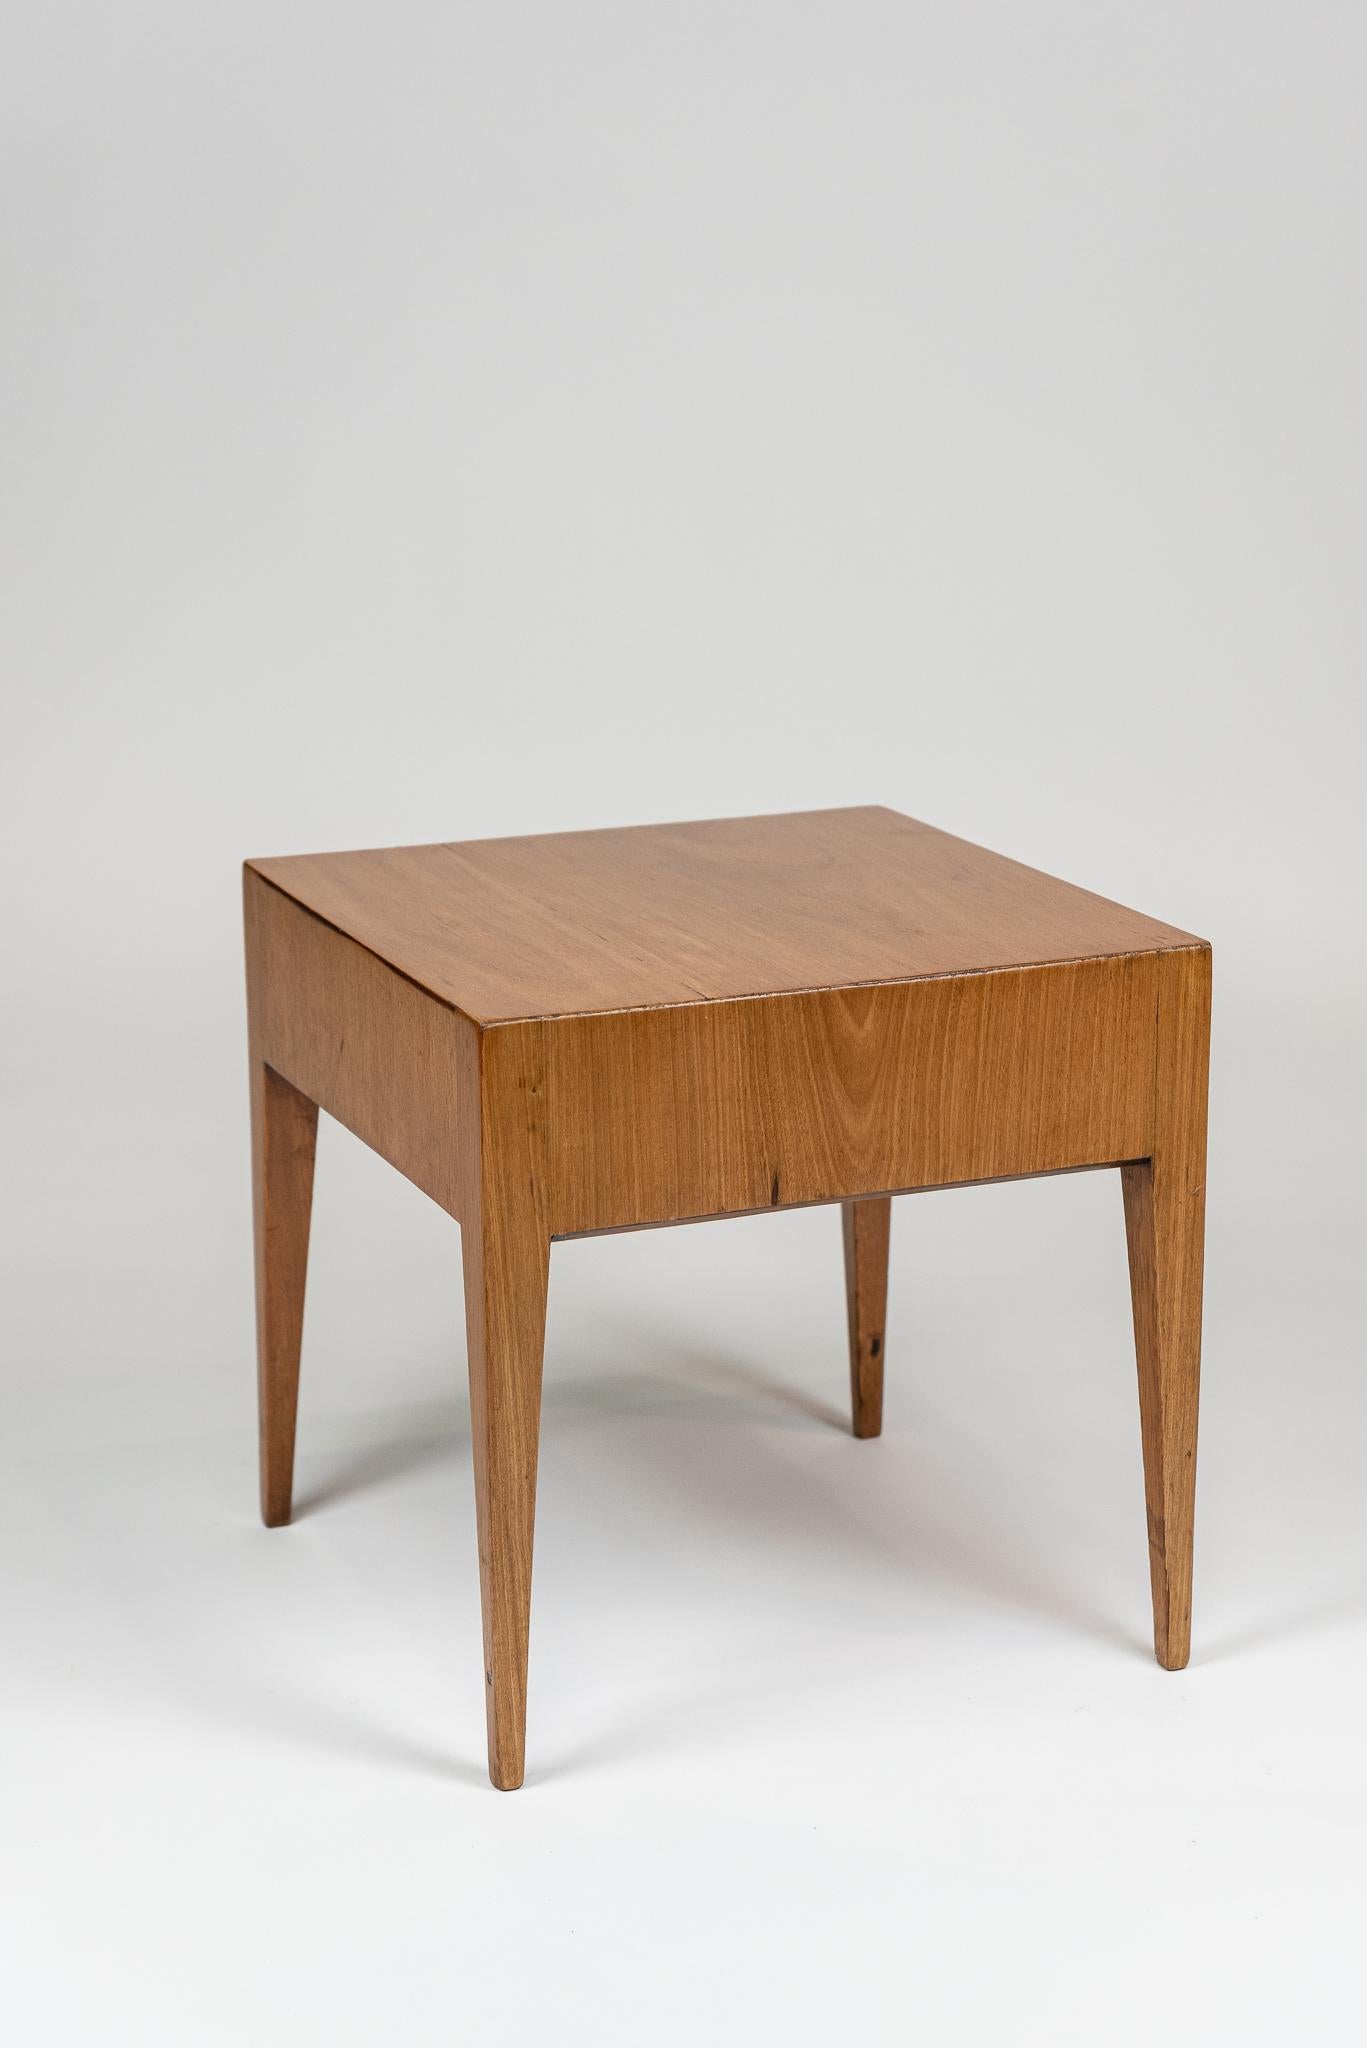 Wood Joaquim Tenreiro, Bedside Table, 1947